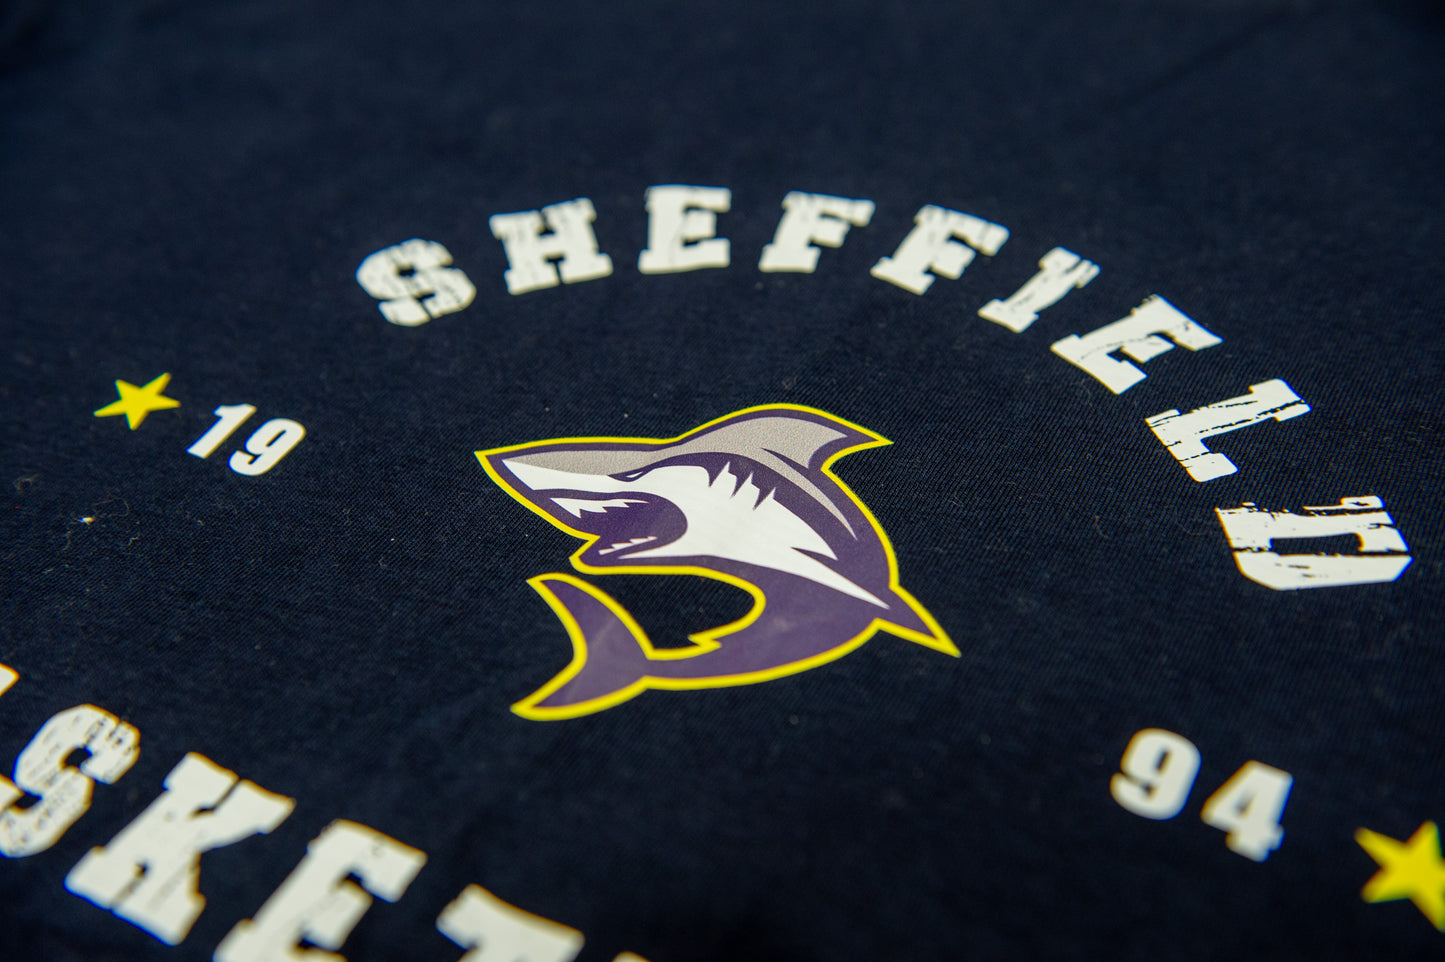 Sheffield Basketball Established Logo T-Shirt - Navy